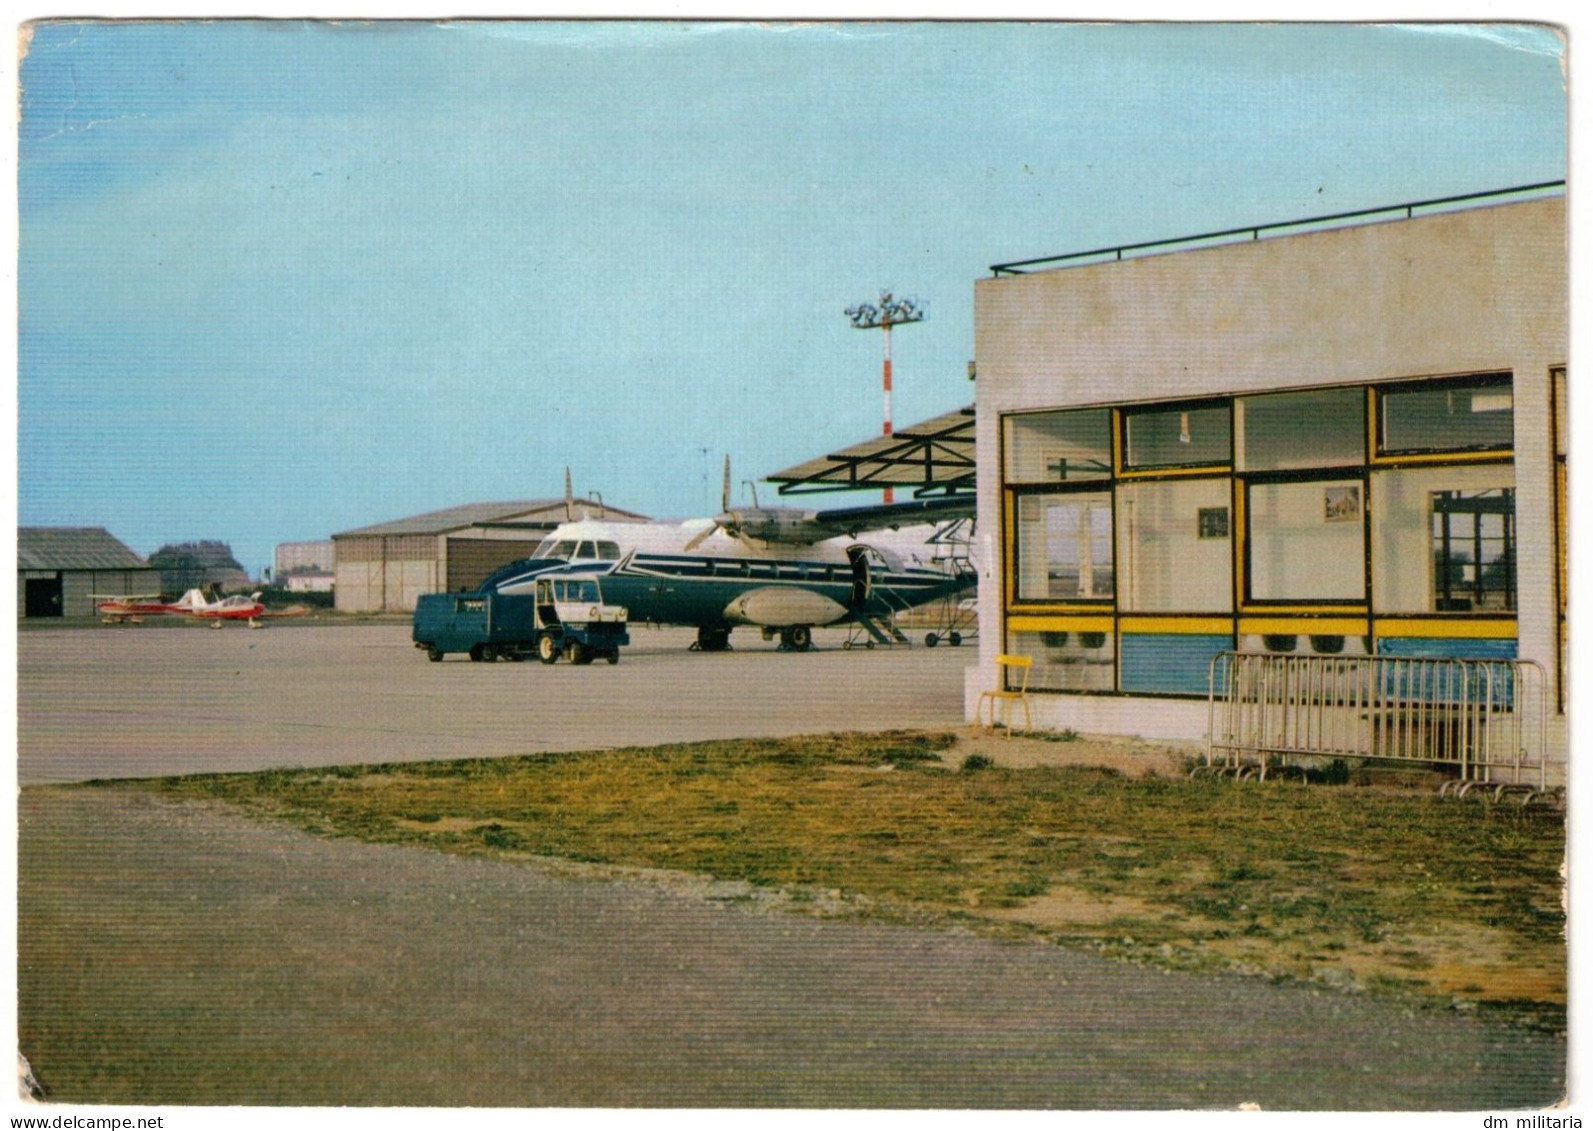 57 - METZ - L'AÉROPORT - E Ci. 6 - AVION EN ATTENTE SUR LE TARMAC - MARLY FRESCATY - MOSELLE - Aerodromes